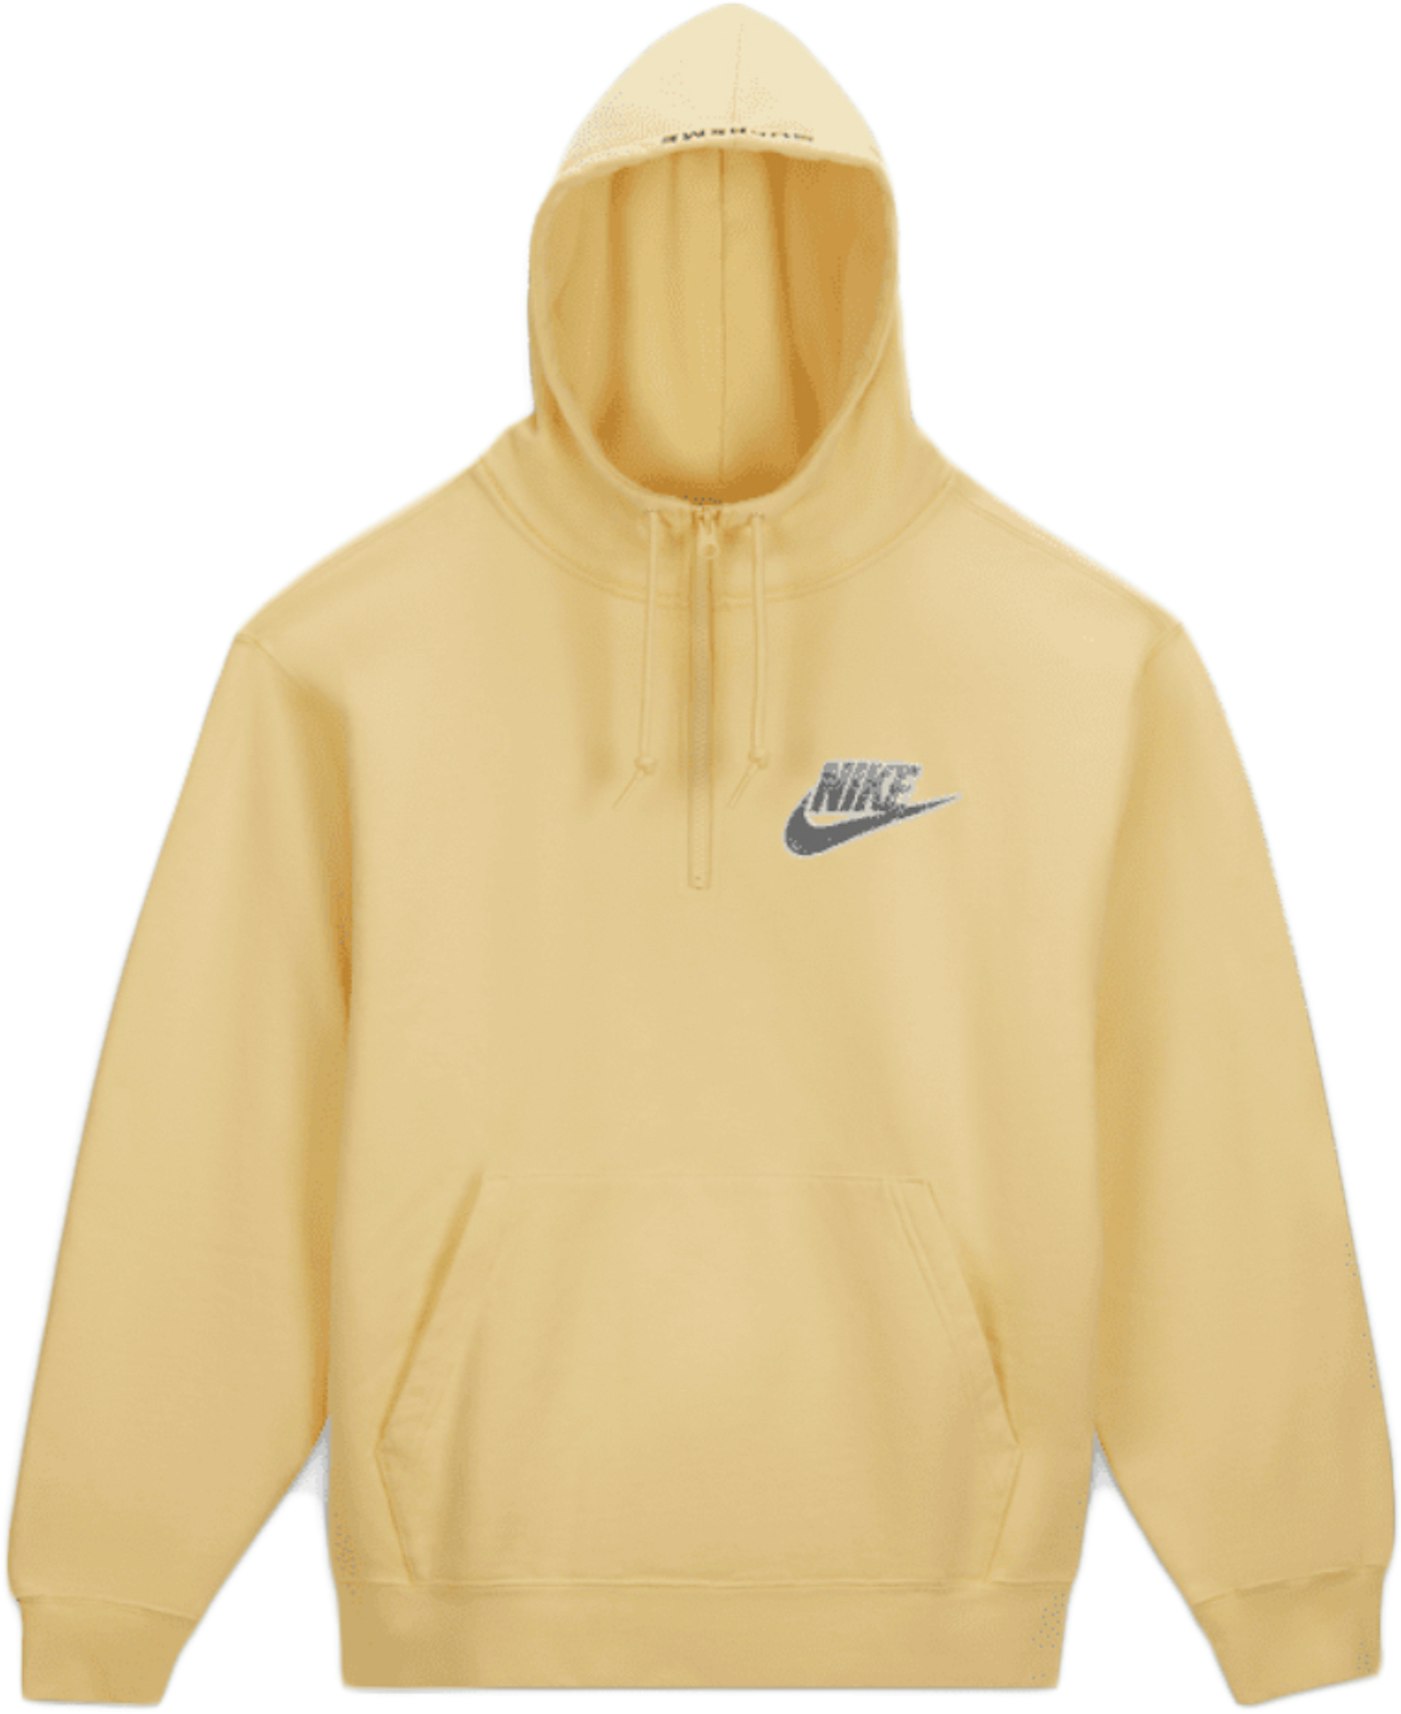 Supreme Nike Half Zip Hooded Pale Yellow - SS21 - US